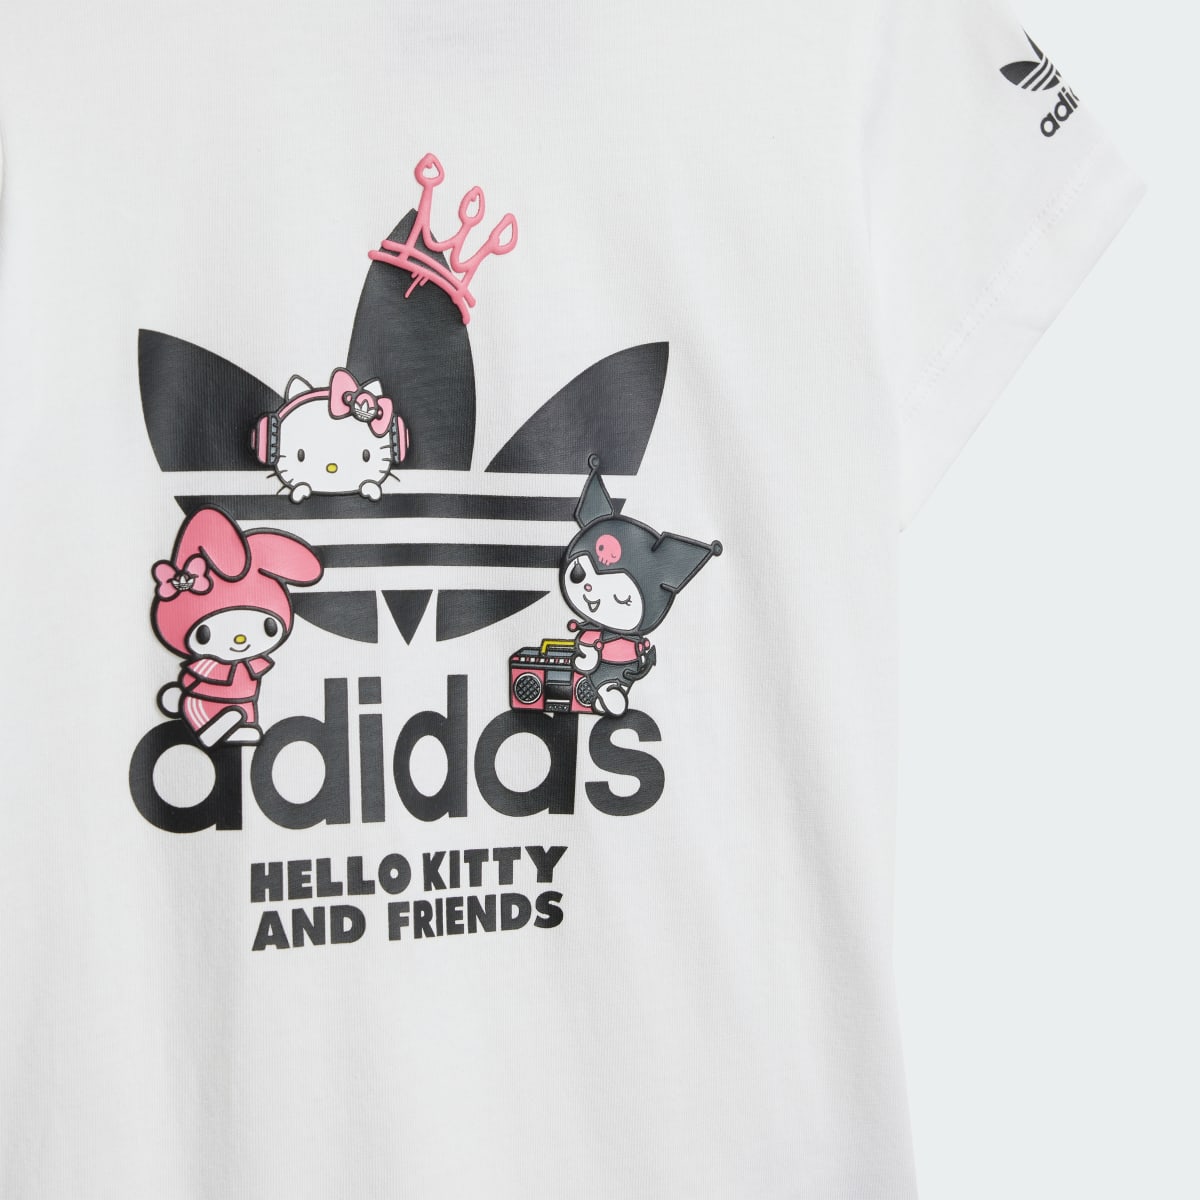 Adidas Originals x Hello Kitty Elbise Tayt Takımı. 7